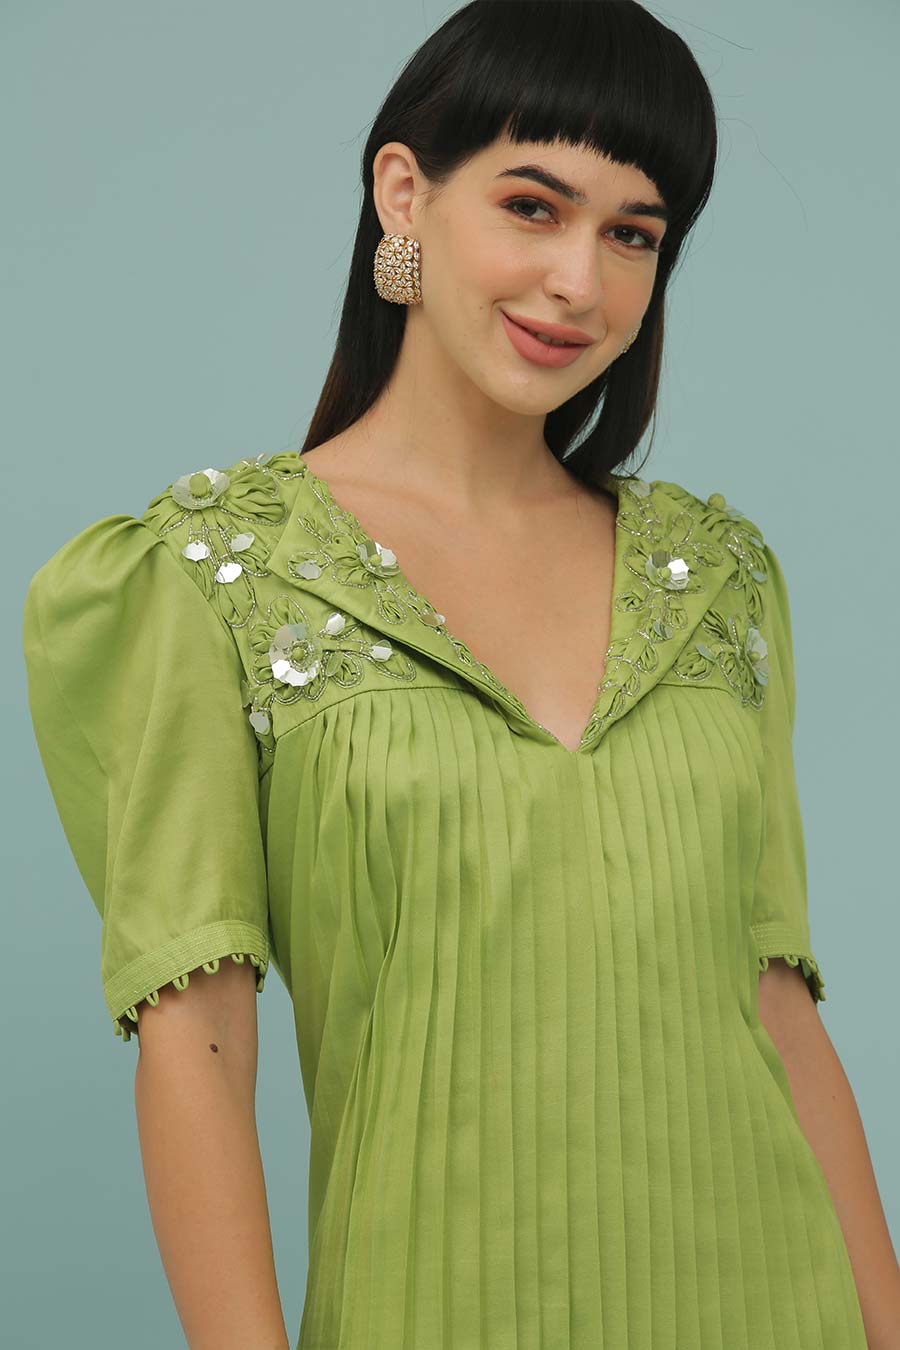 Green A-Line Pleated Dress